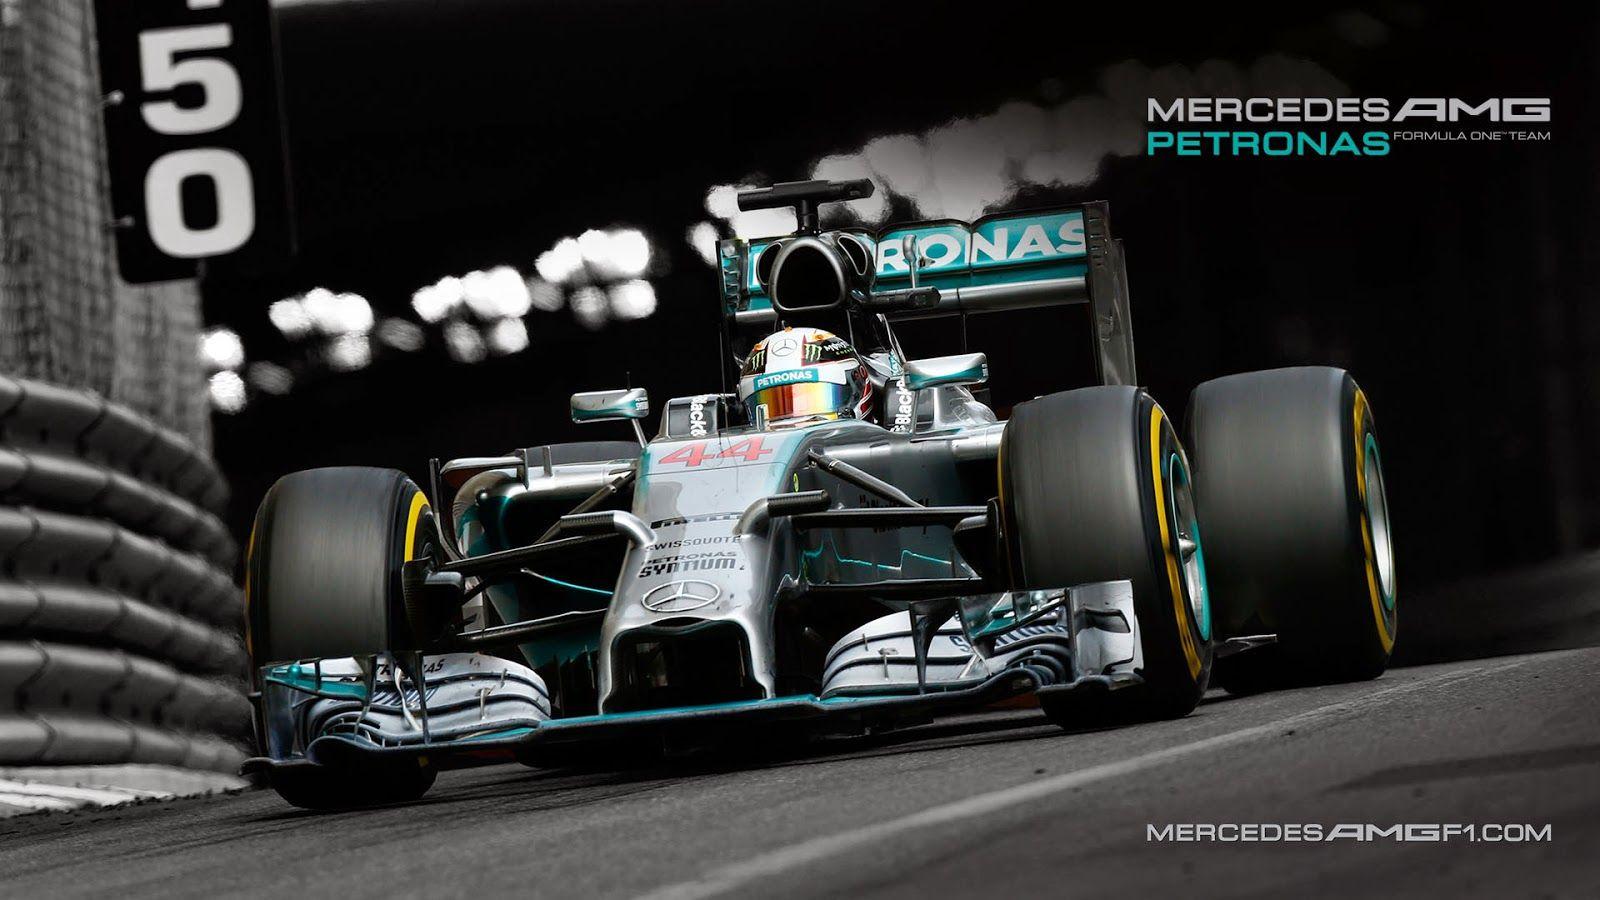 F1 Mercedes Wallpaper HD Resolution #klH. Mercedes wallpaper, Mercedes amg, Amg petronas